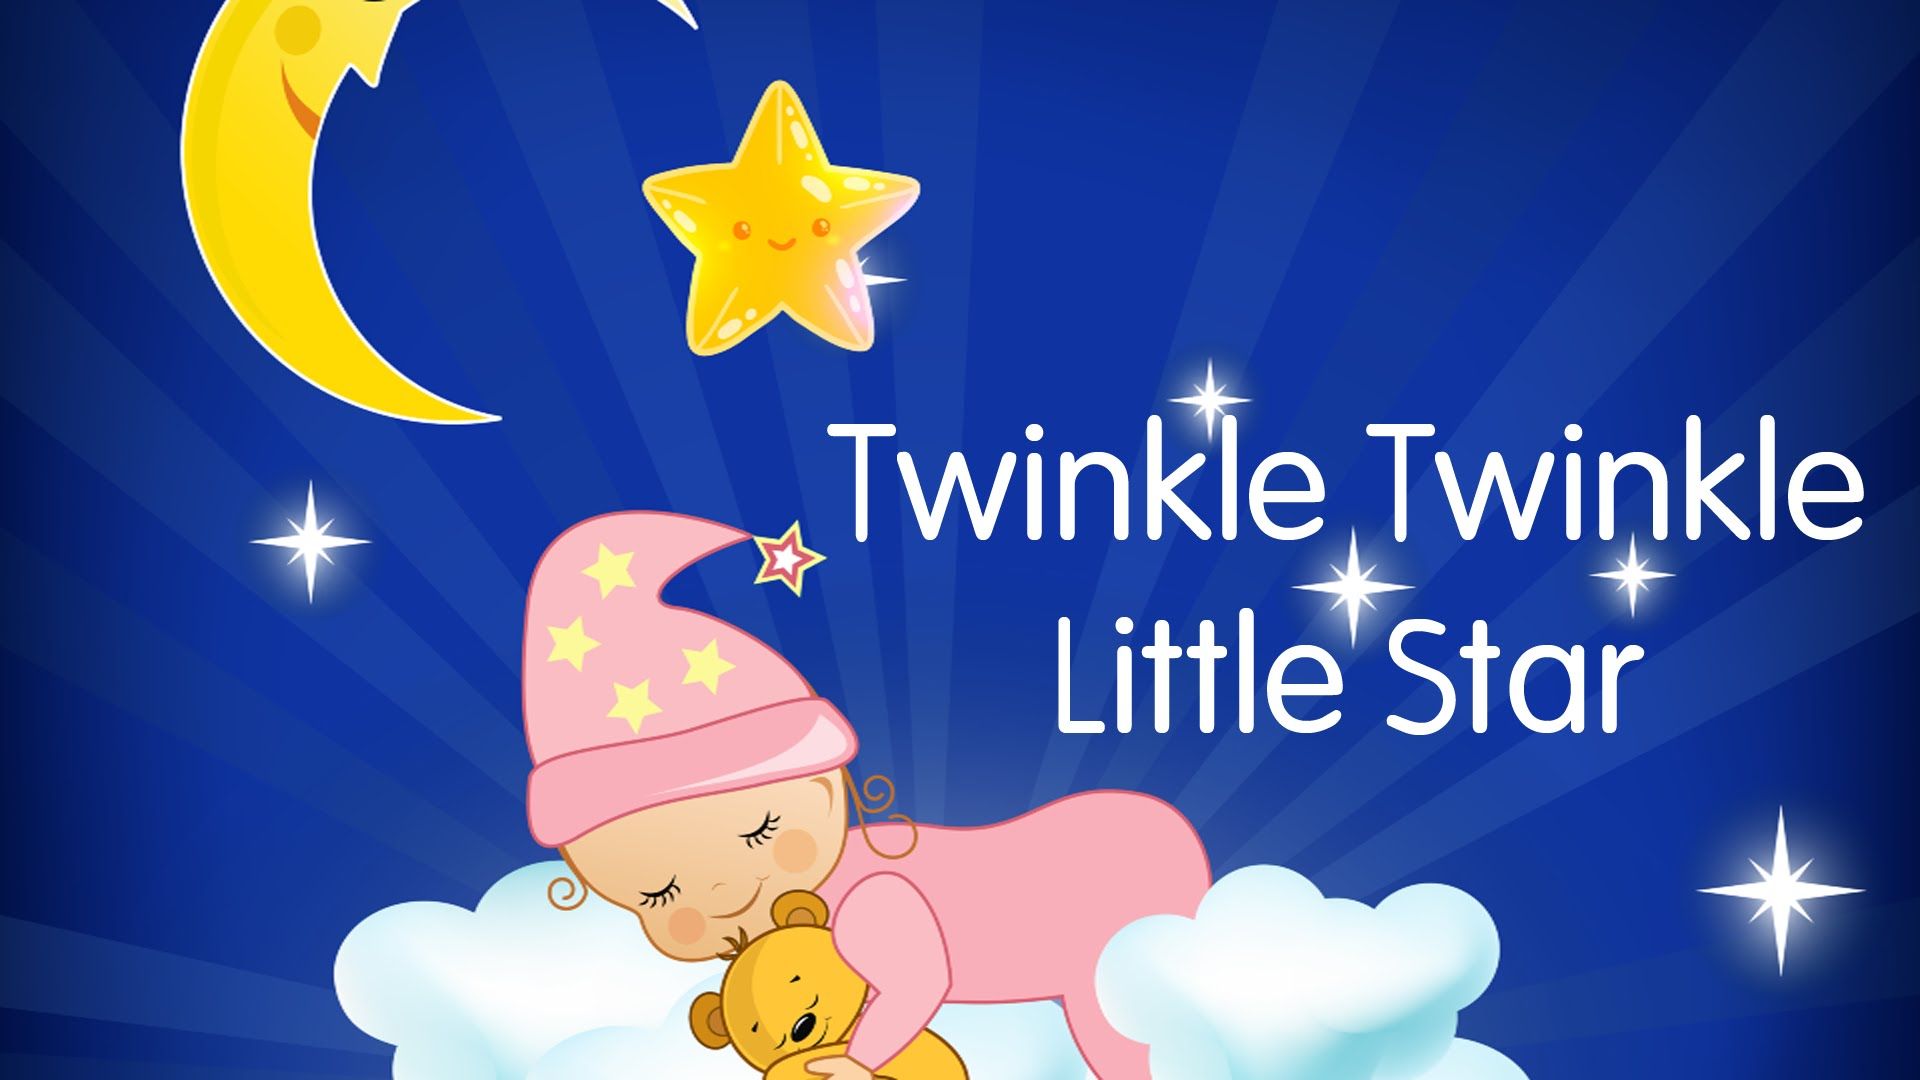 Игра литл стар. Twinkle little Star. Twinkle, Twinkle, little Star. Тункул Твинкул литэл Стар. Колыбельная Твинкл.